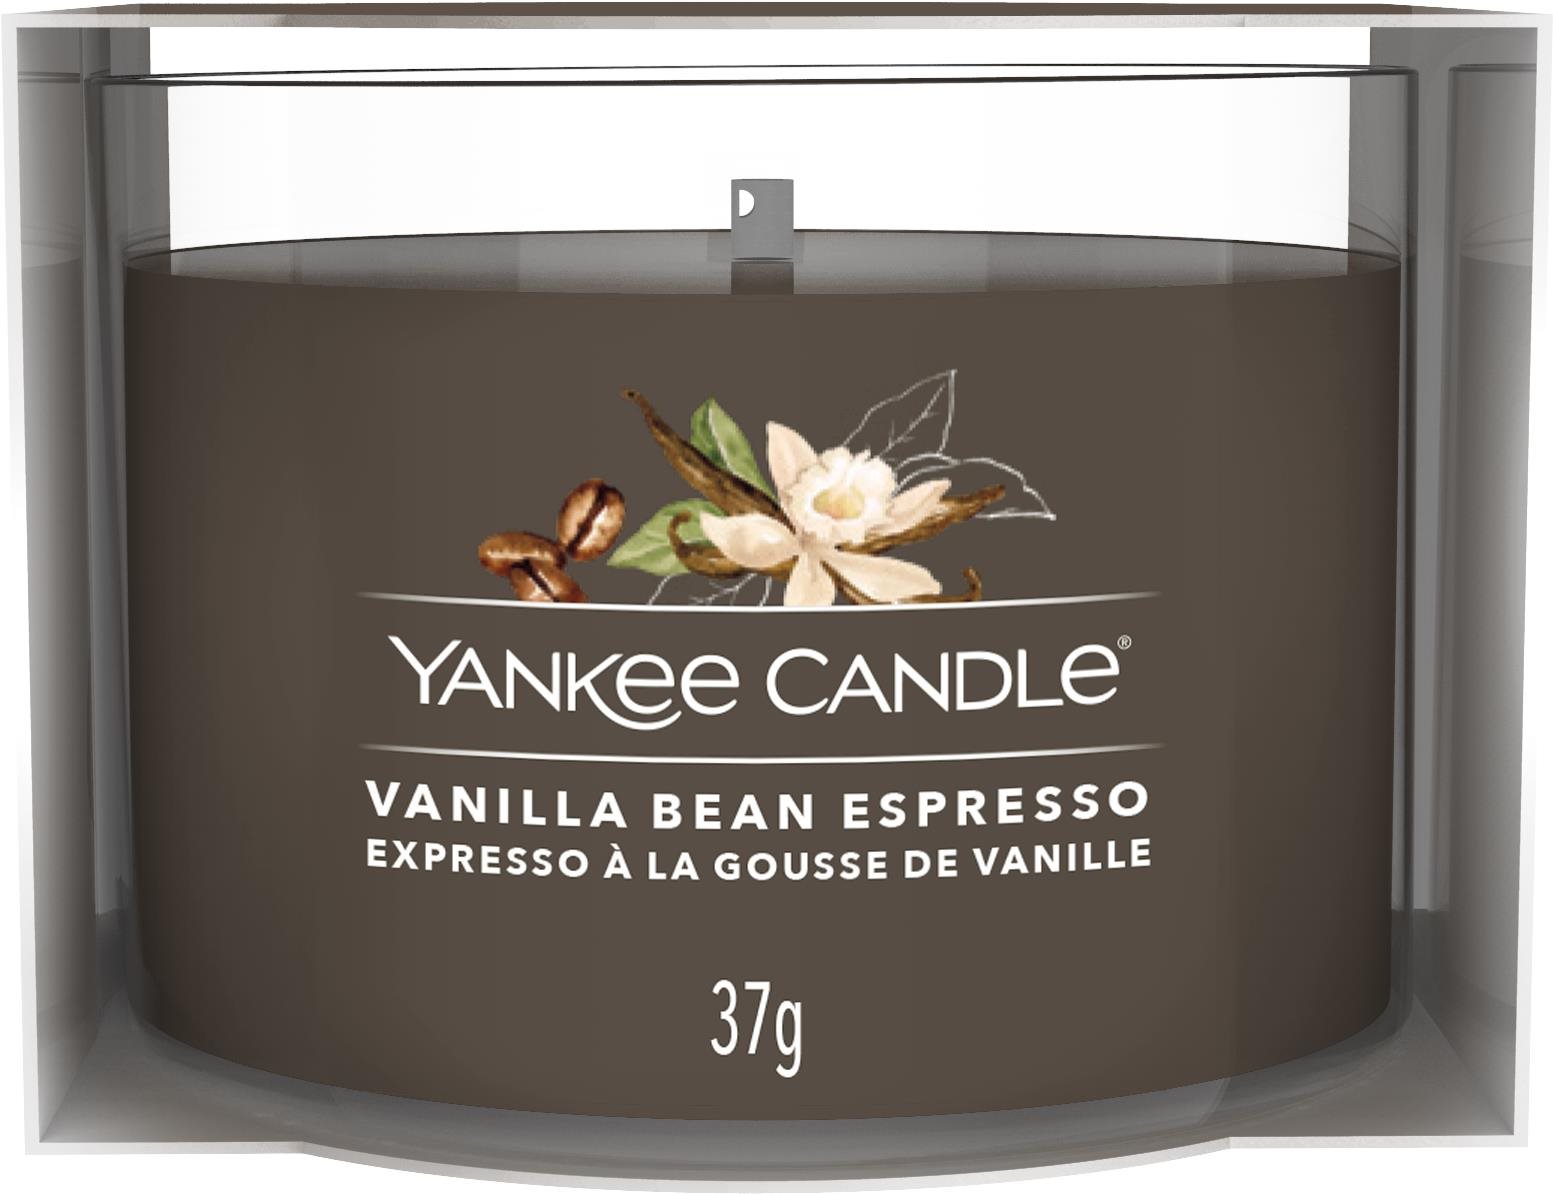 YANKEE CANDLE Vanilla Bean Espresso 37 g